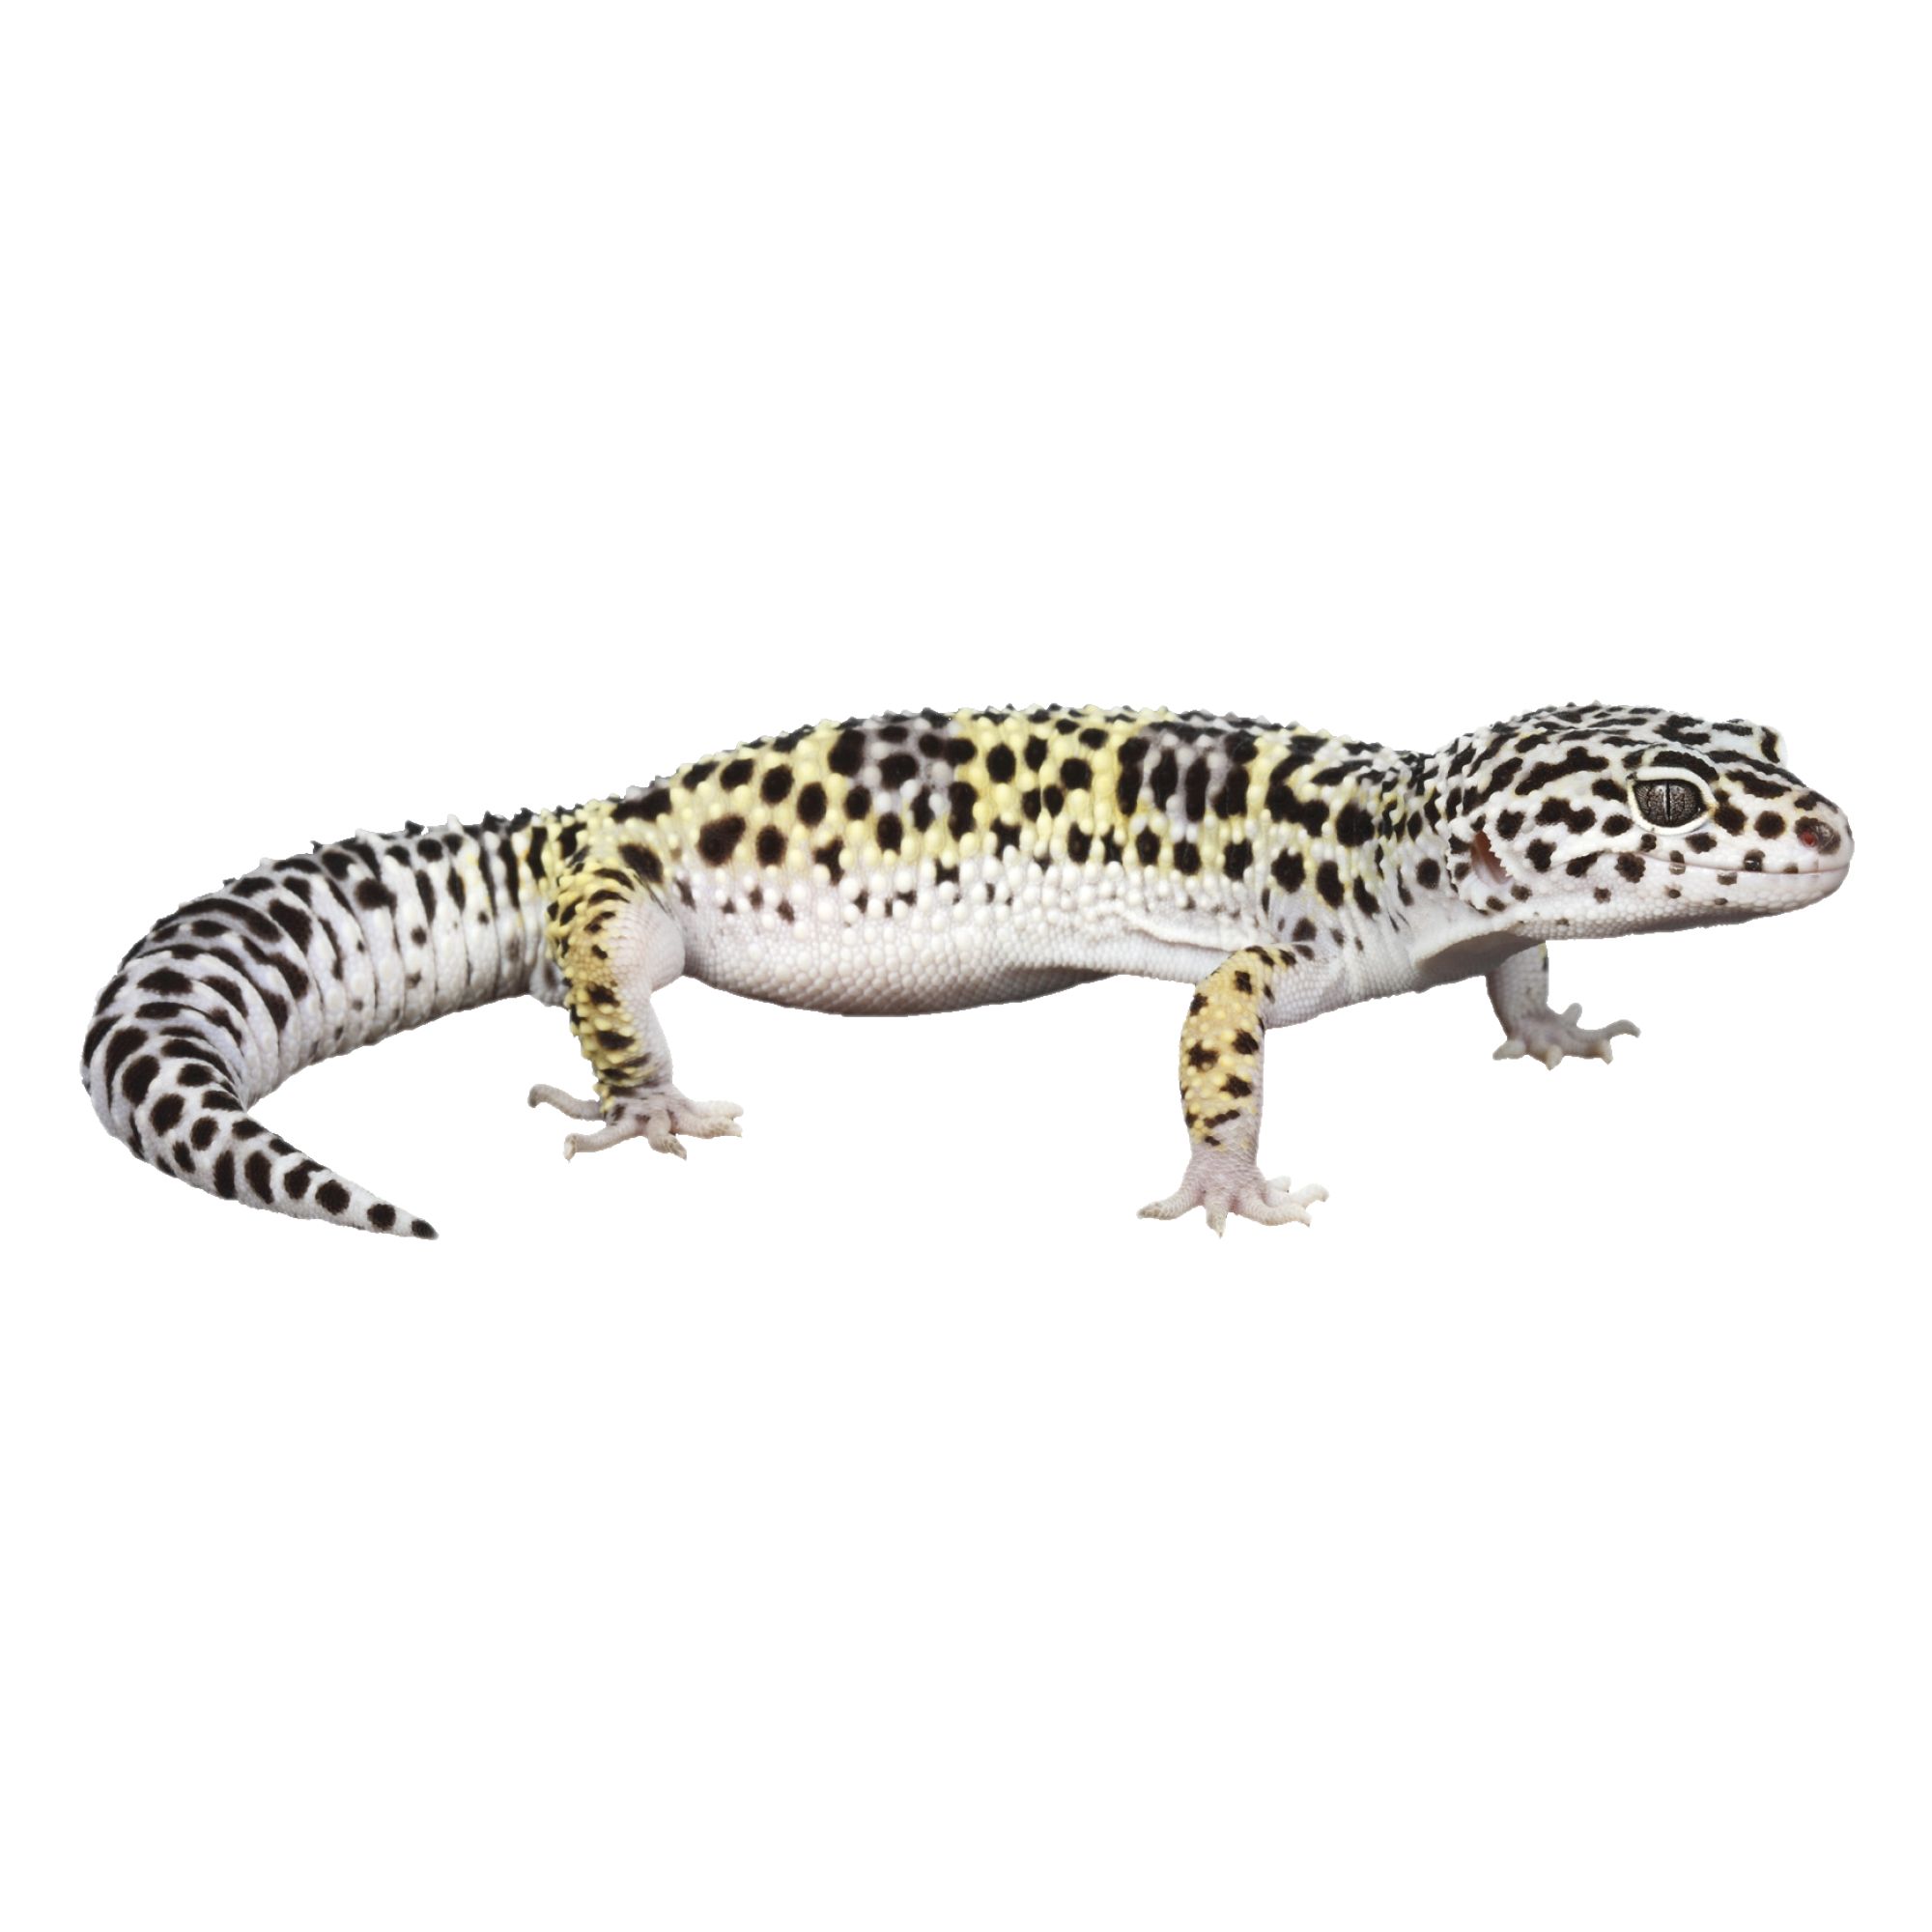 NDBE Leopard Gecko